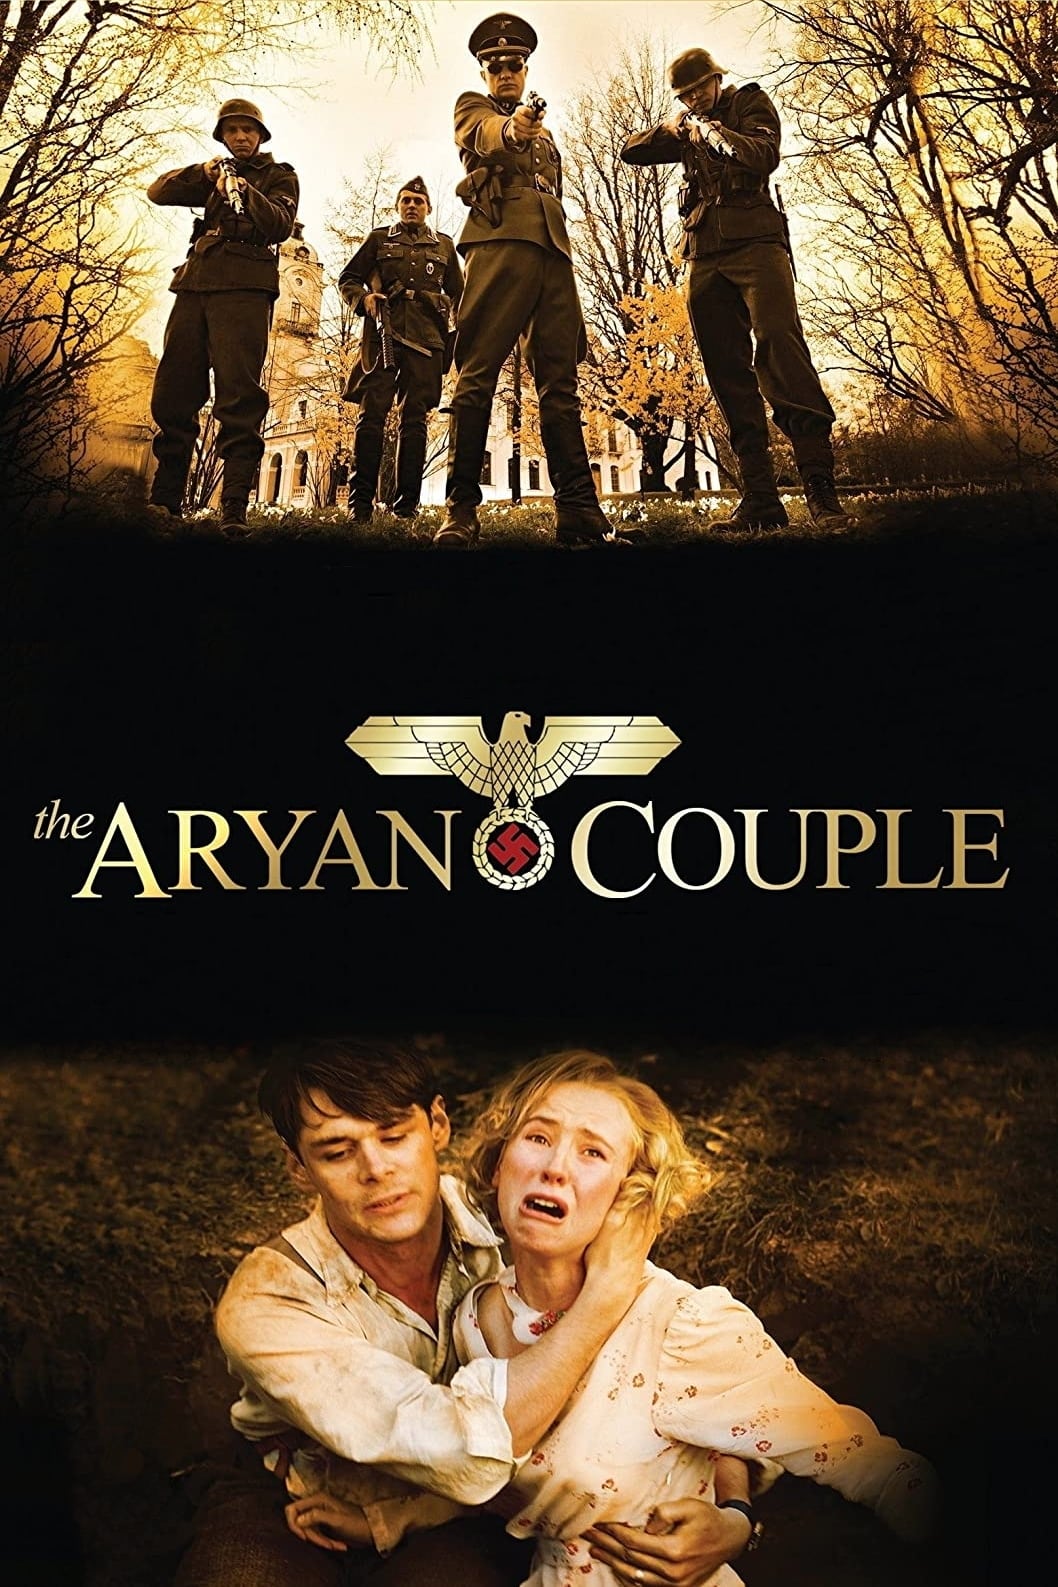 The Aryan Couple (2004)